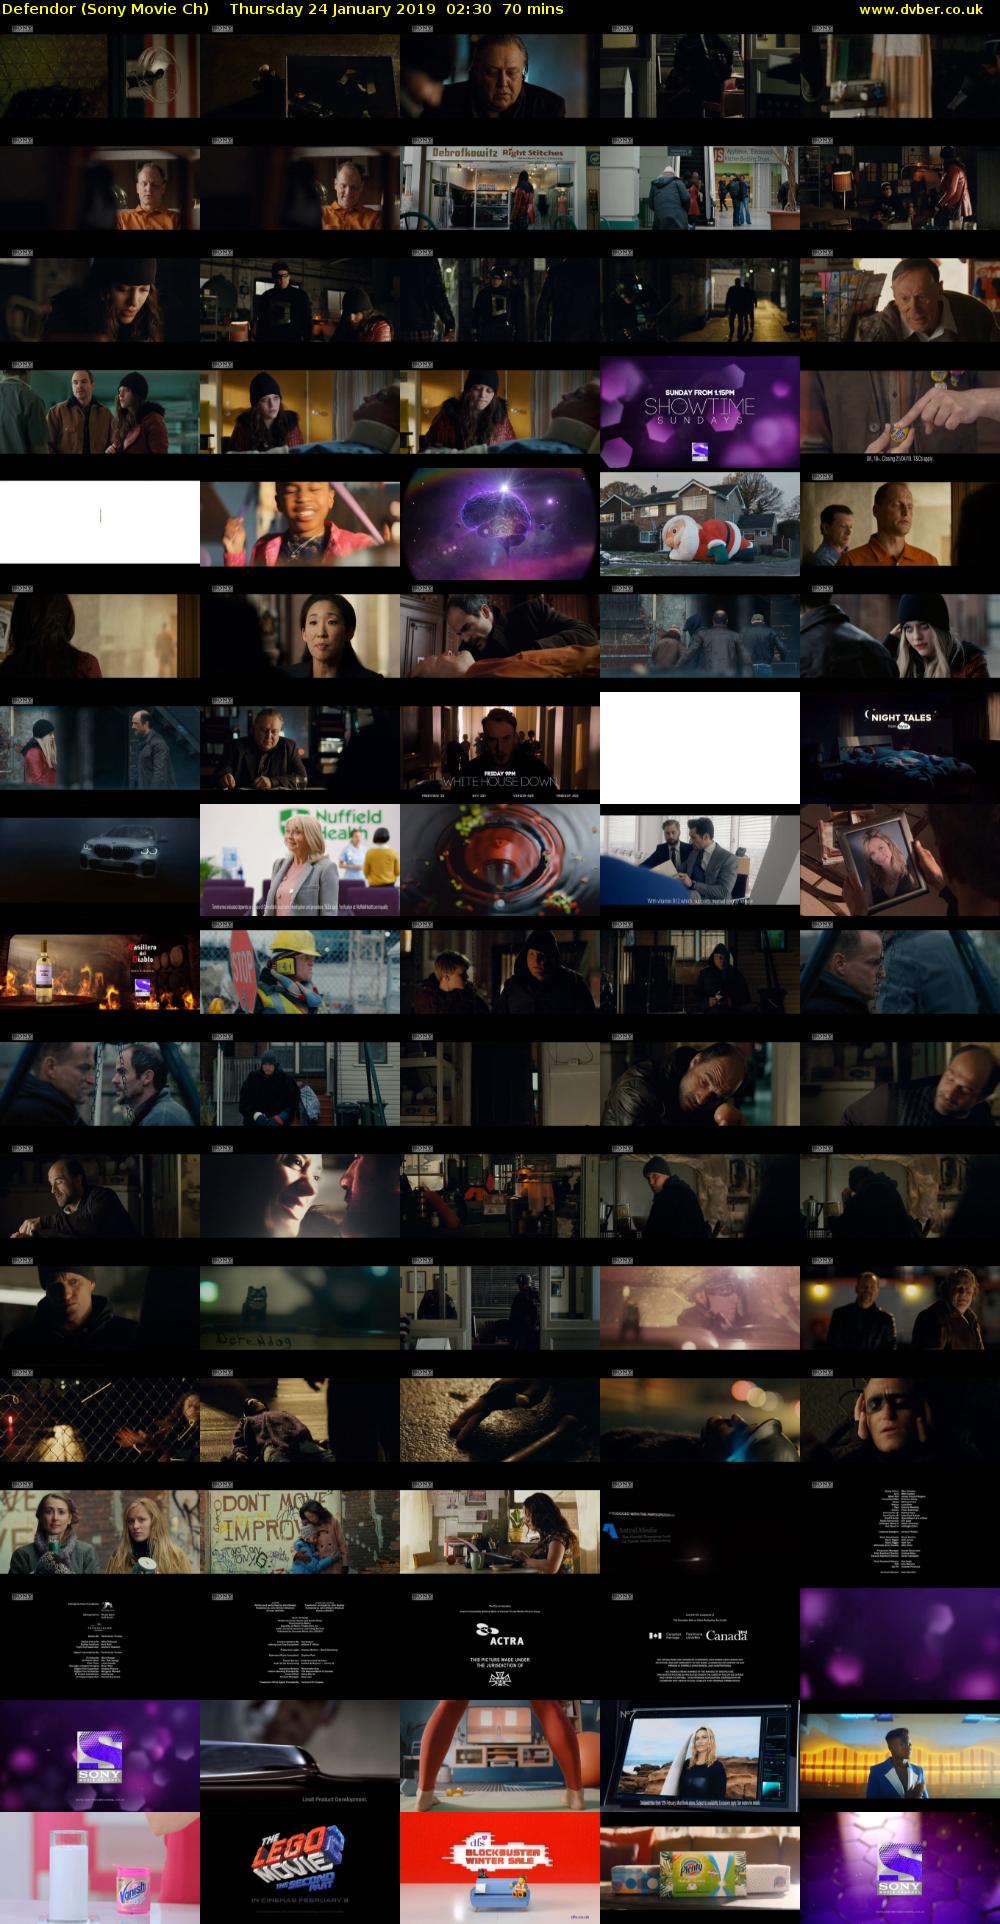 Defendor (Sony Movie Ch) Thursday 24 January 2019 02:30 - 03:40